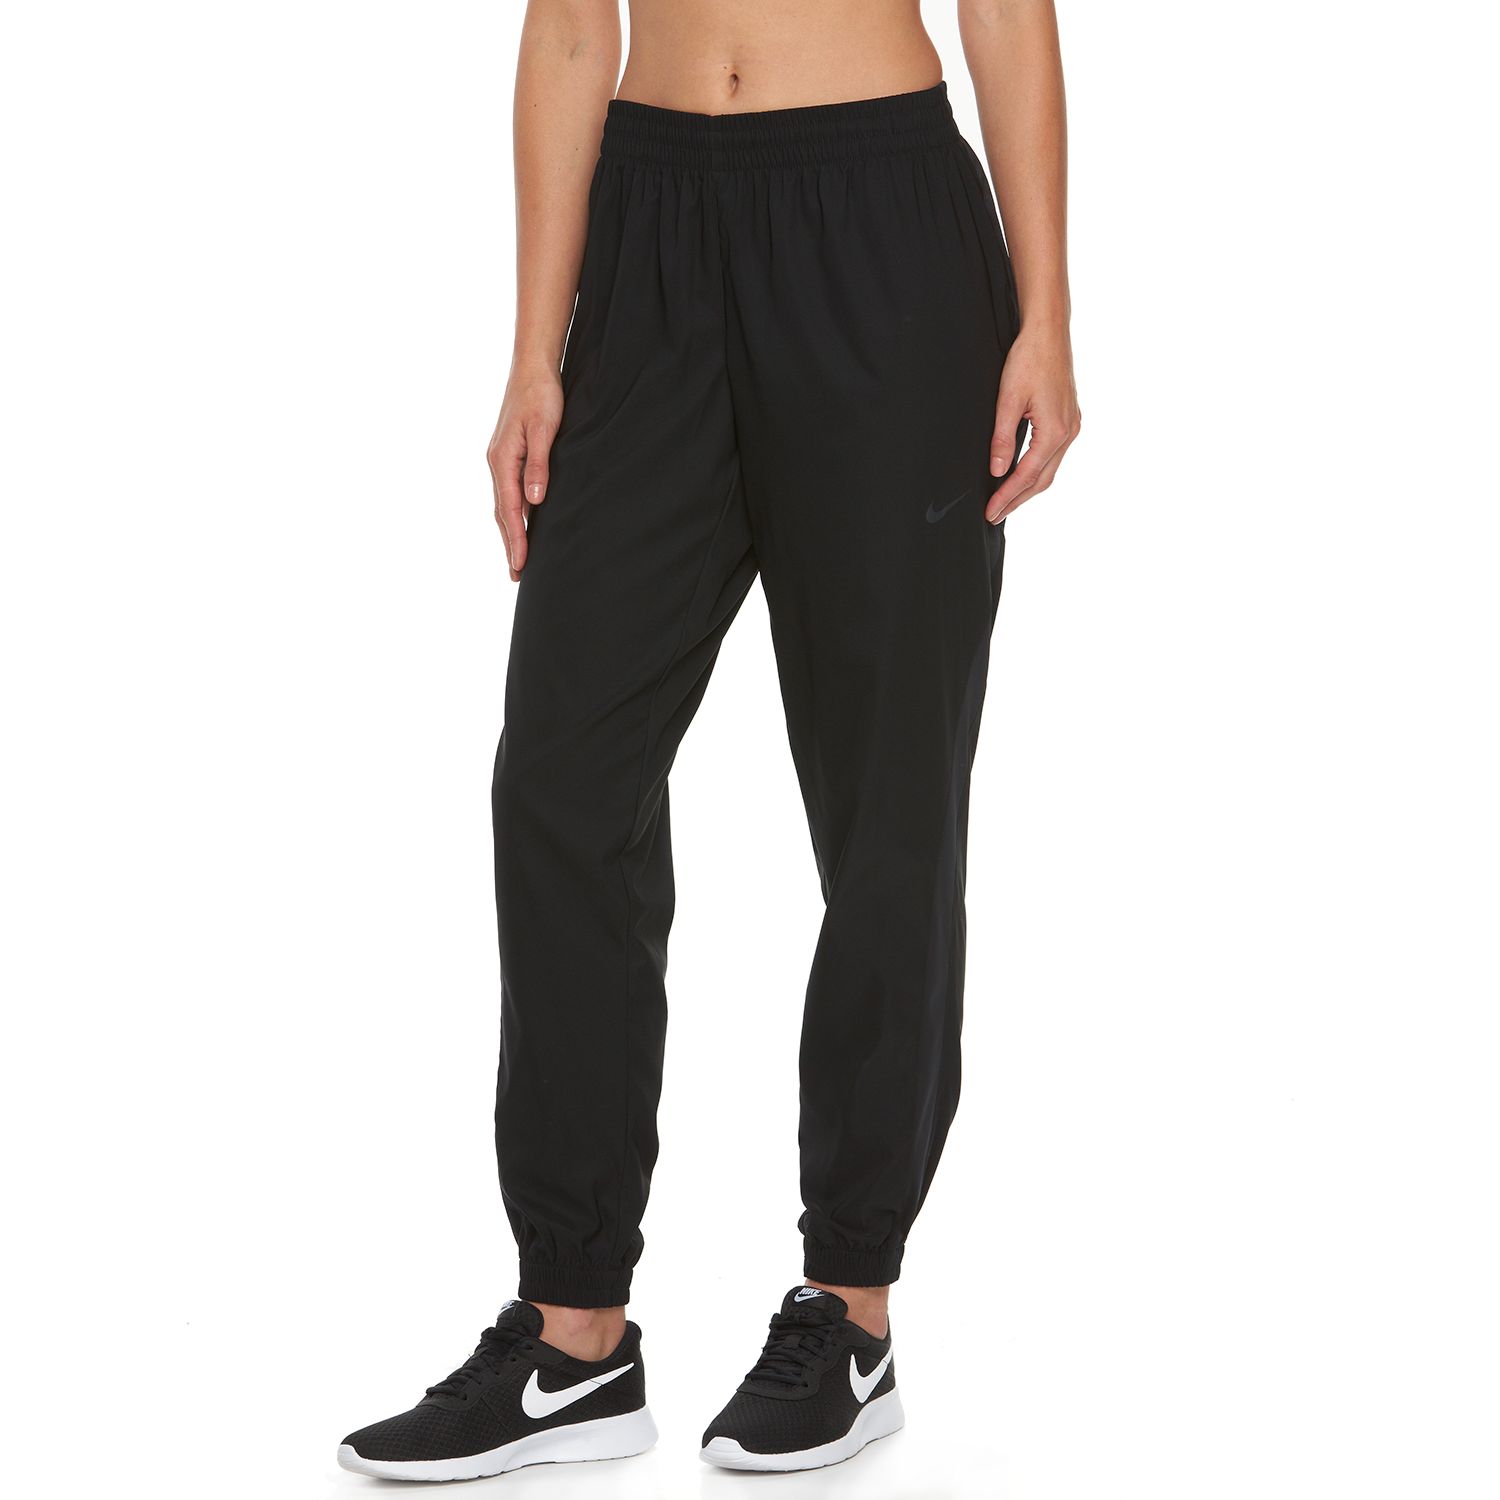 Women's Nike Flex Training Pants